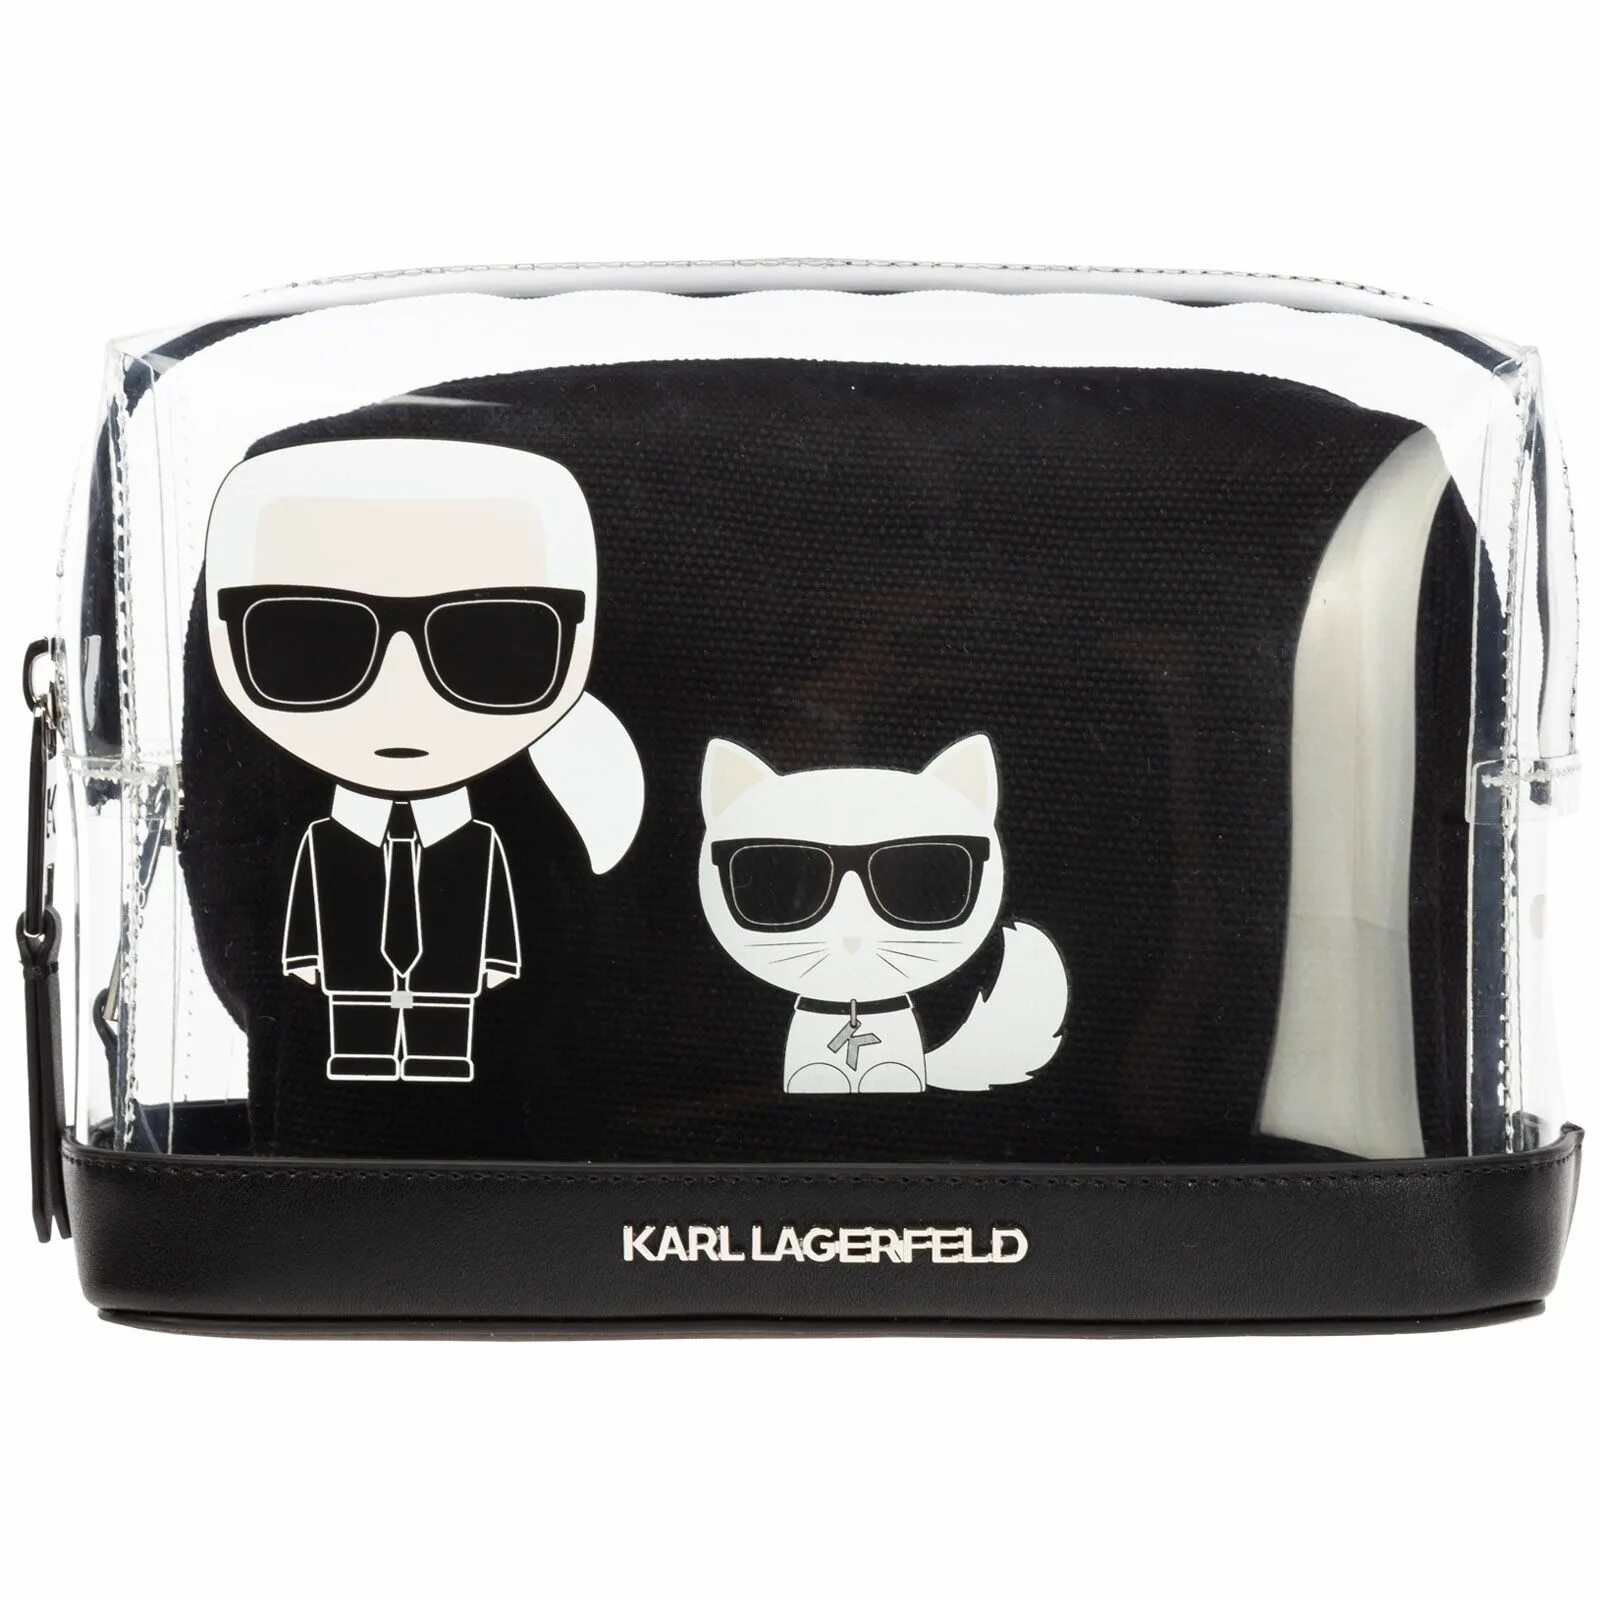 Karl lagerfeld karl tokyo shibuya. Karl Lagerfeld портфель. Karl Lagerfeld k/ikonik. Karl Lagerfeld портфель мужской. Косметичка Karl Lagerfeld.